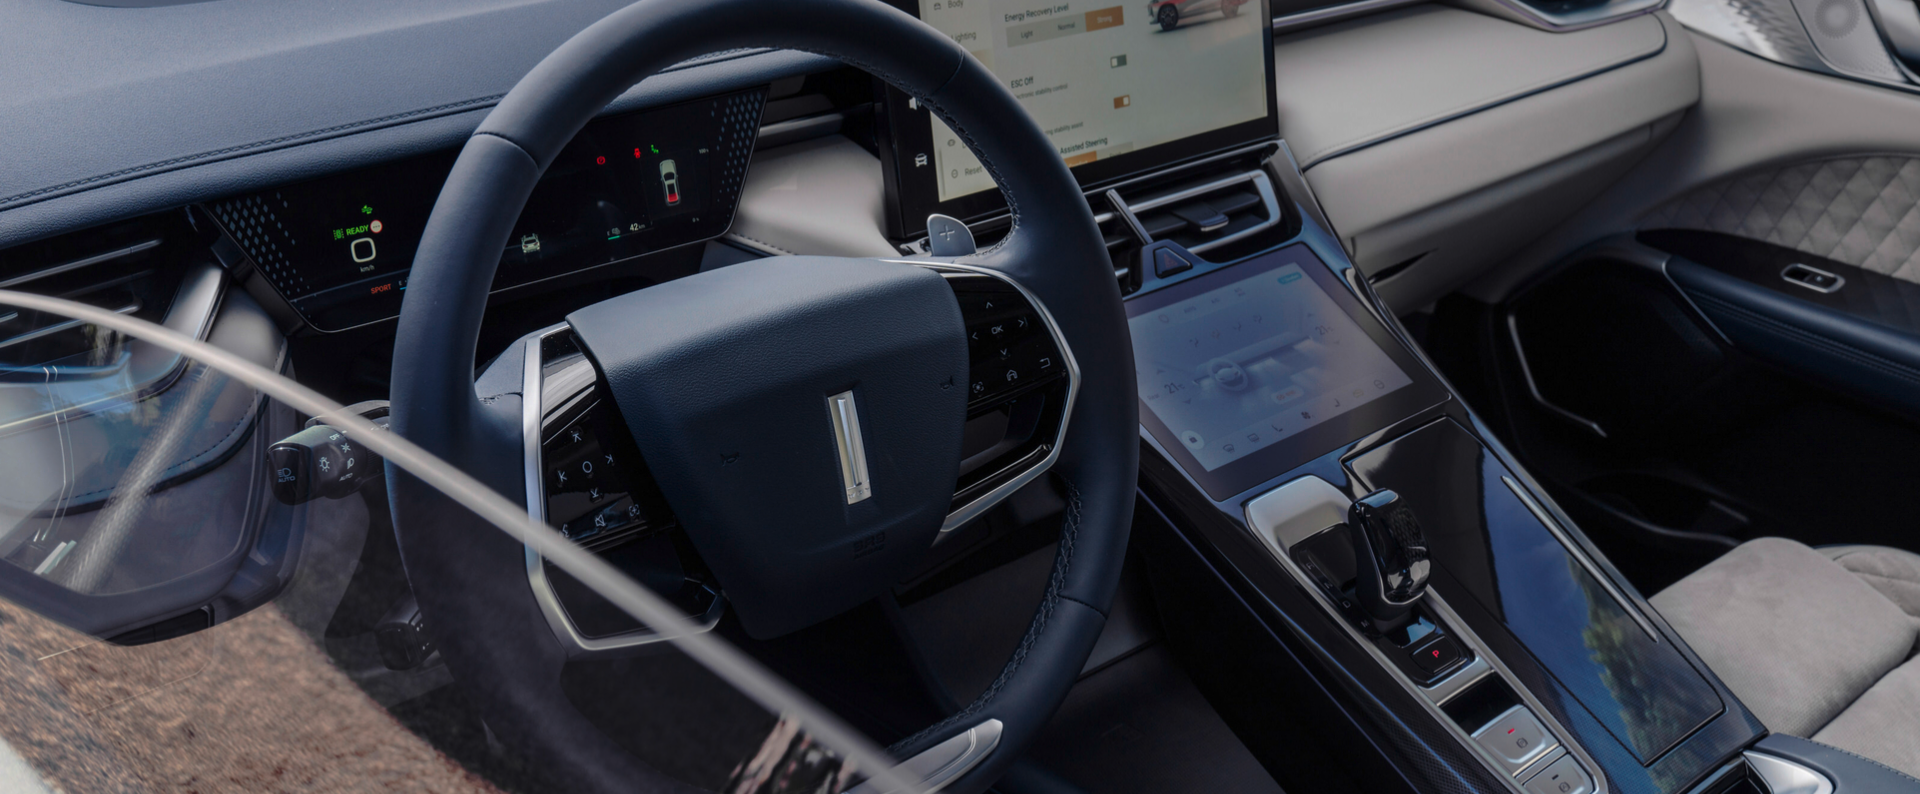 интериорът на автомобила GWM WEY 05, показващ волана и инфоразвлекателния дисплей